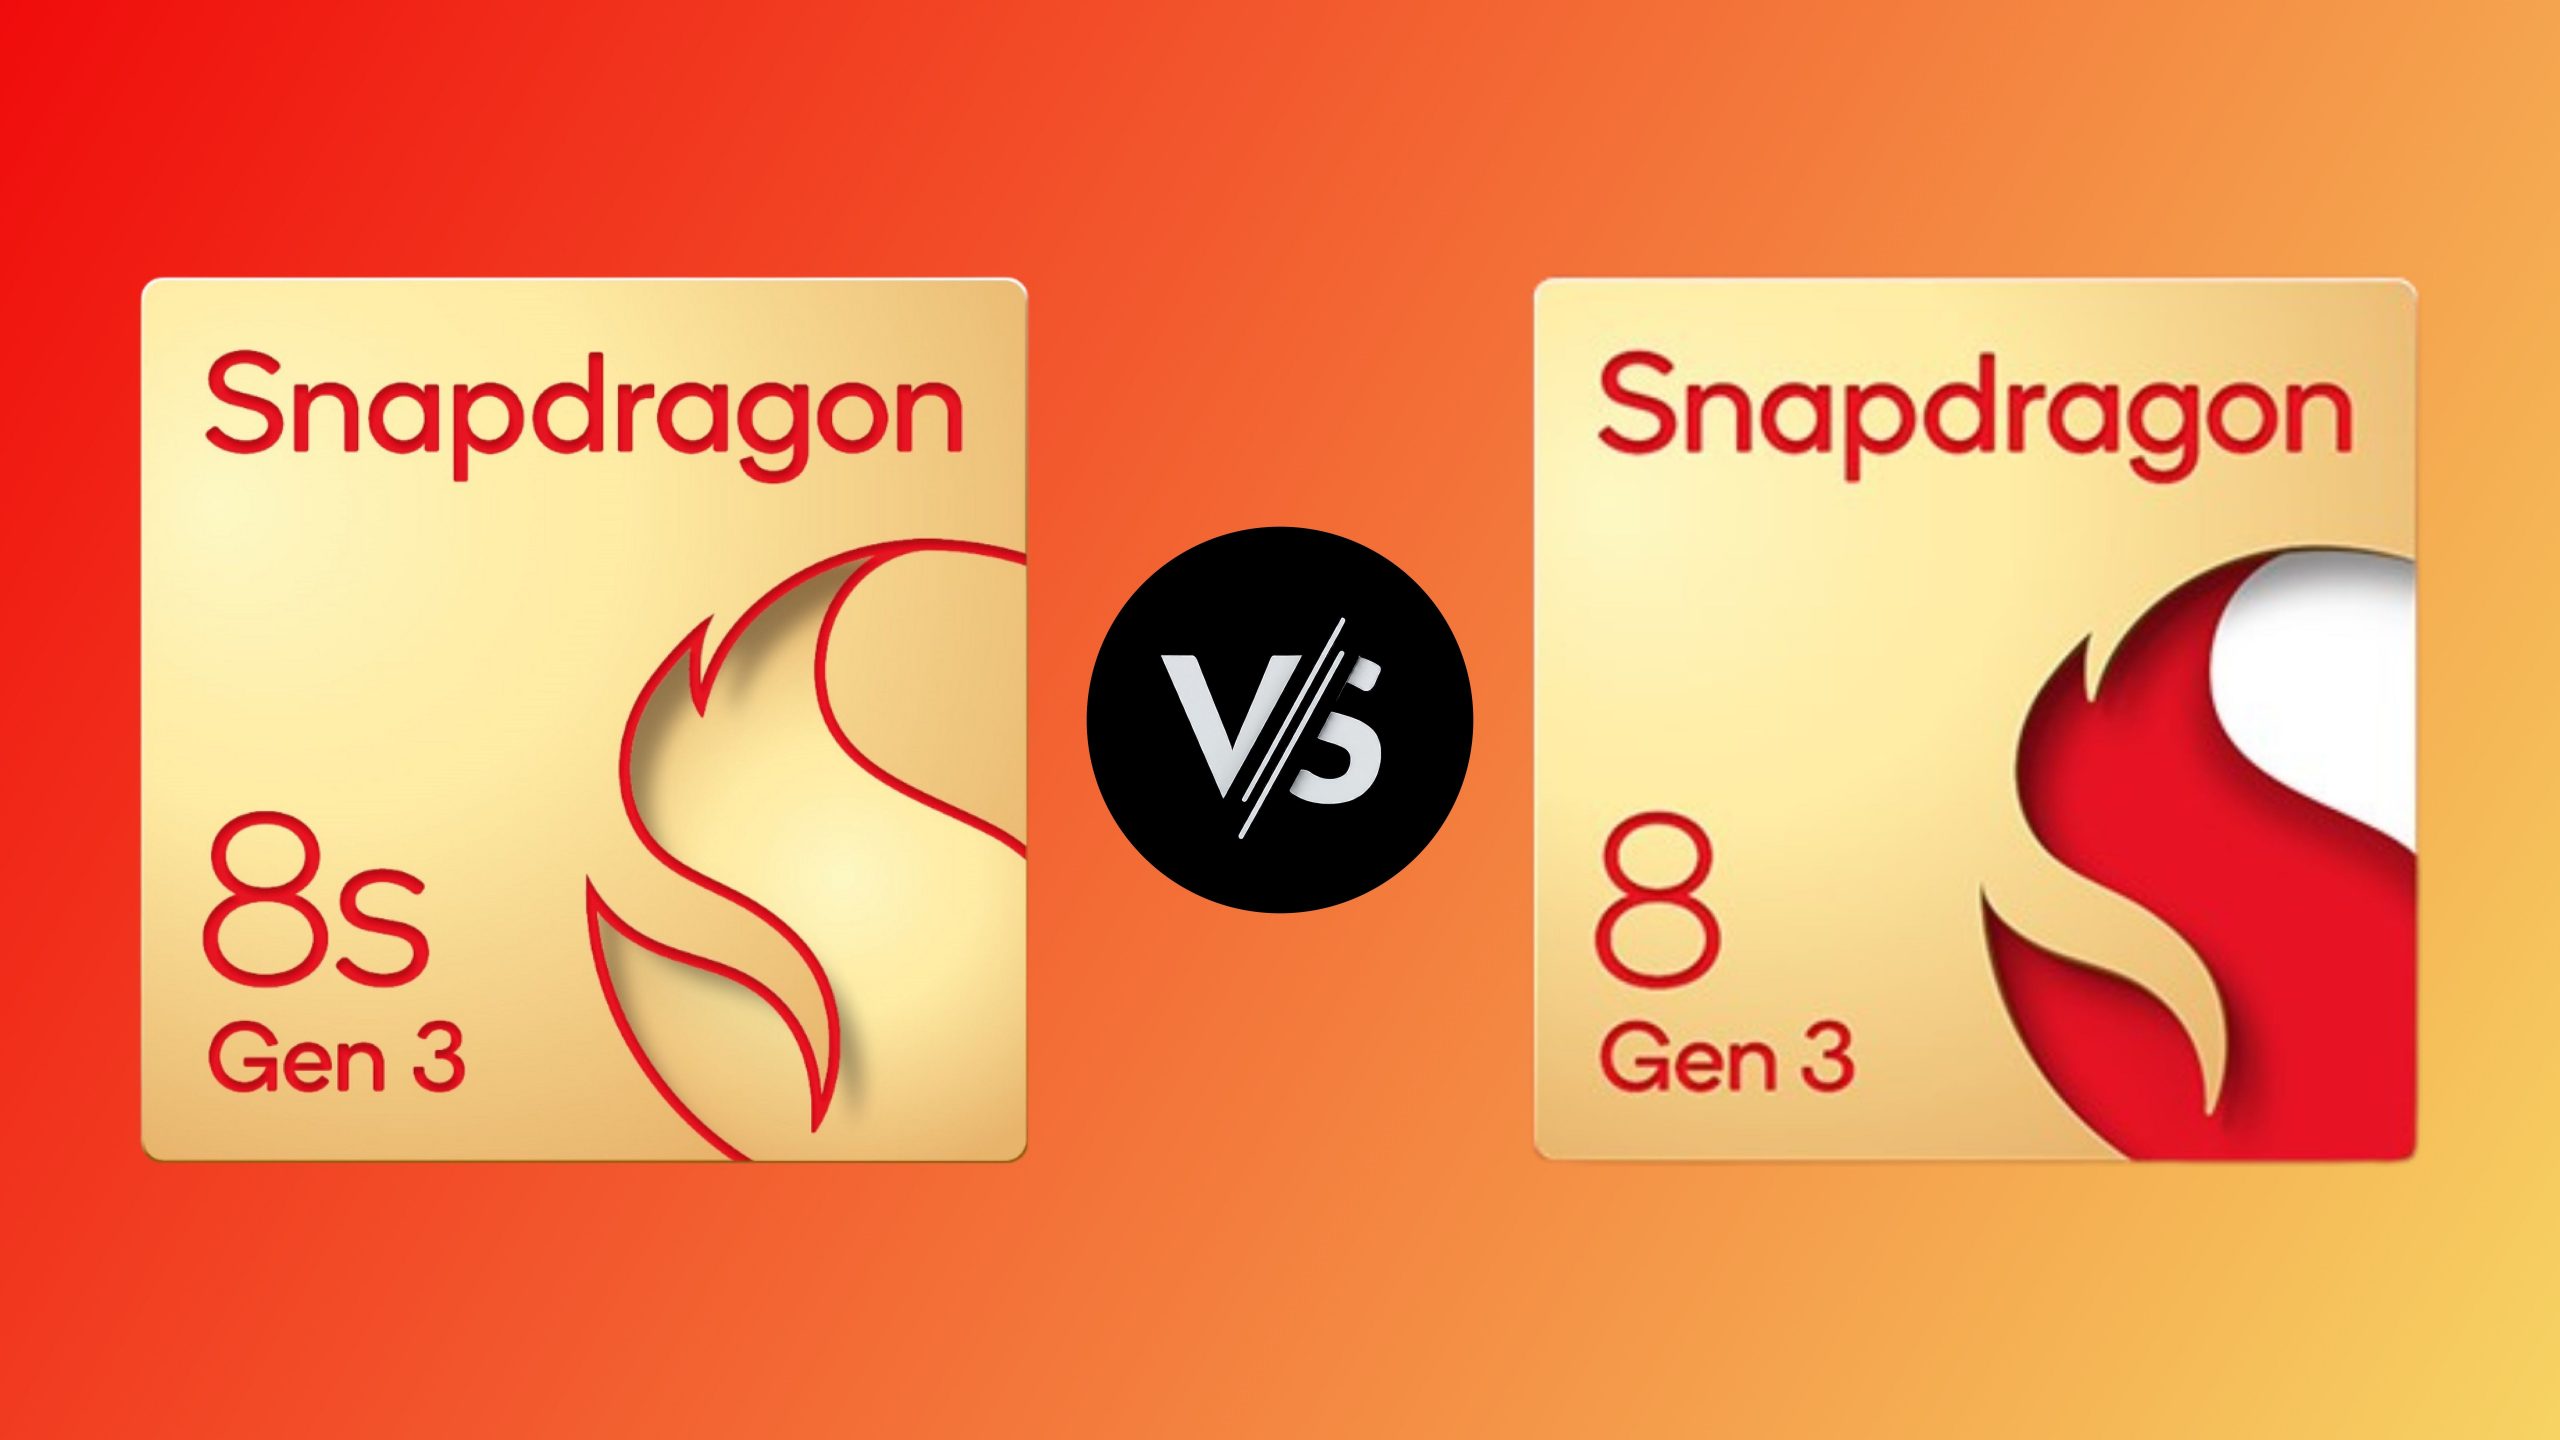 Snapdragon 8s Gen 3 vs Snapdragon 8 Gen 3: What’s Different?